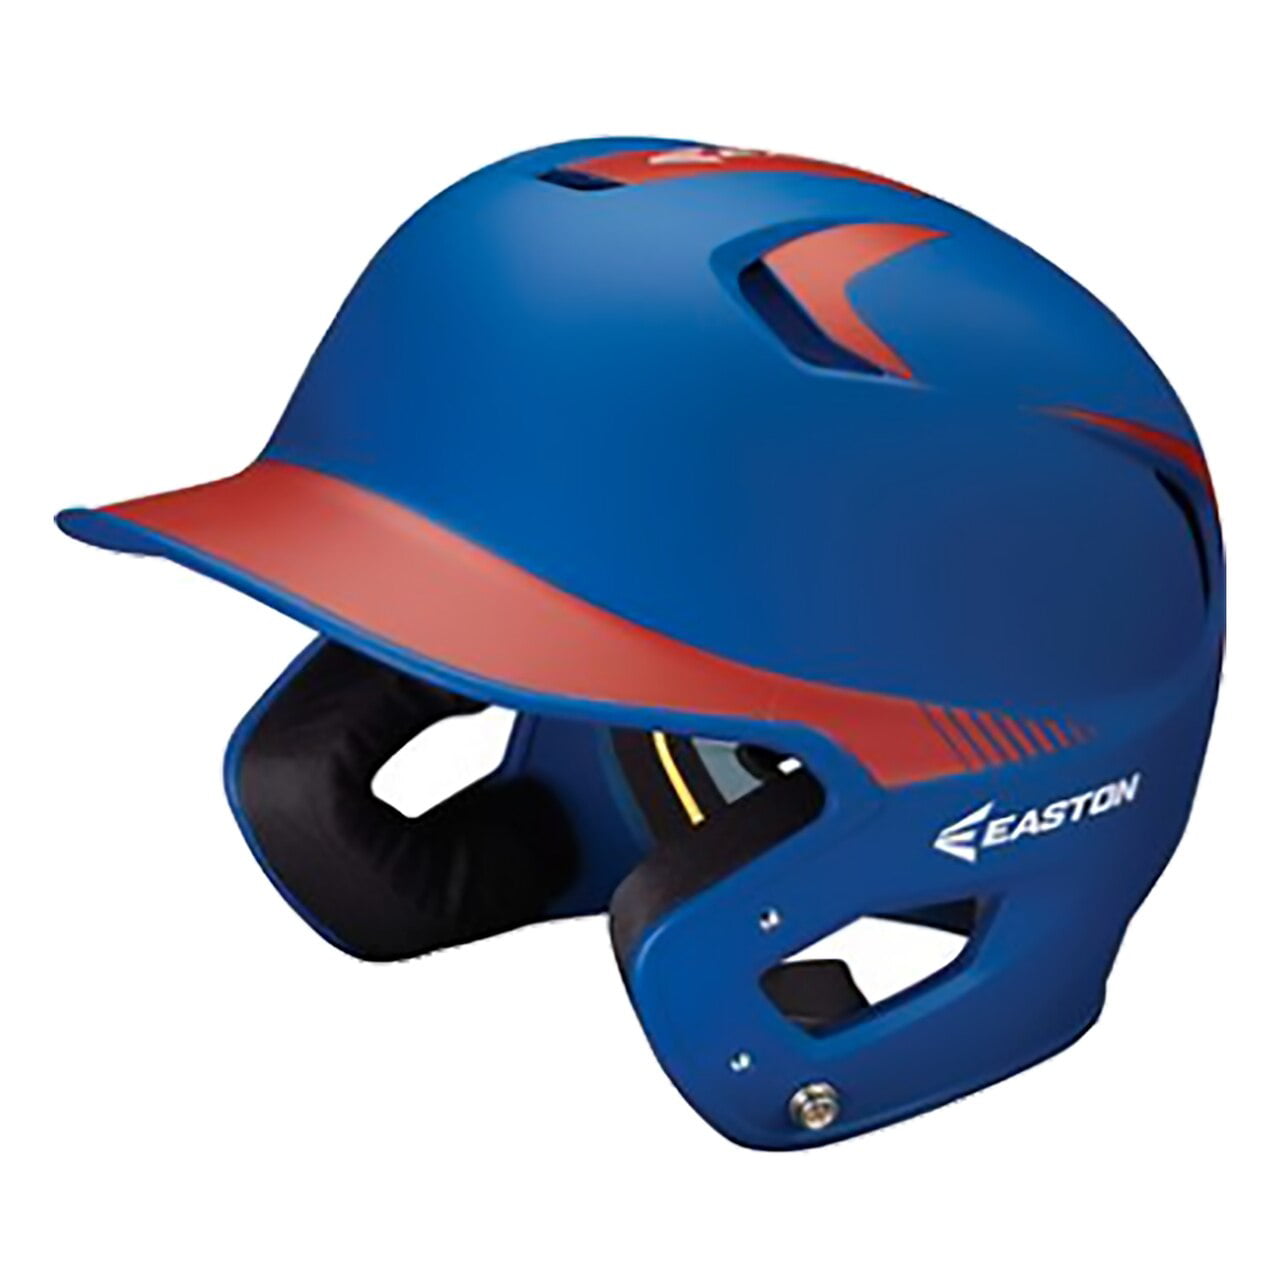 easton-z5-grip-two-tone-jr-batting-helmet-royal-red-6-3-8in-to-7-1-8in-small-medium-jr